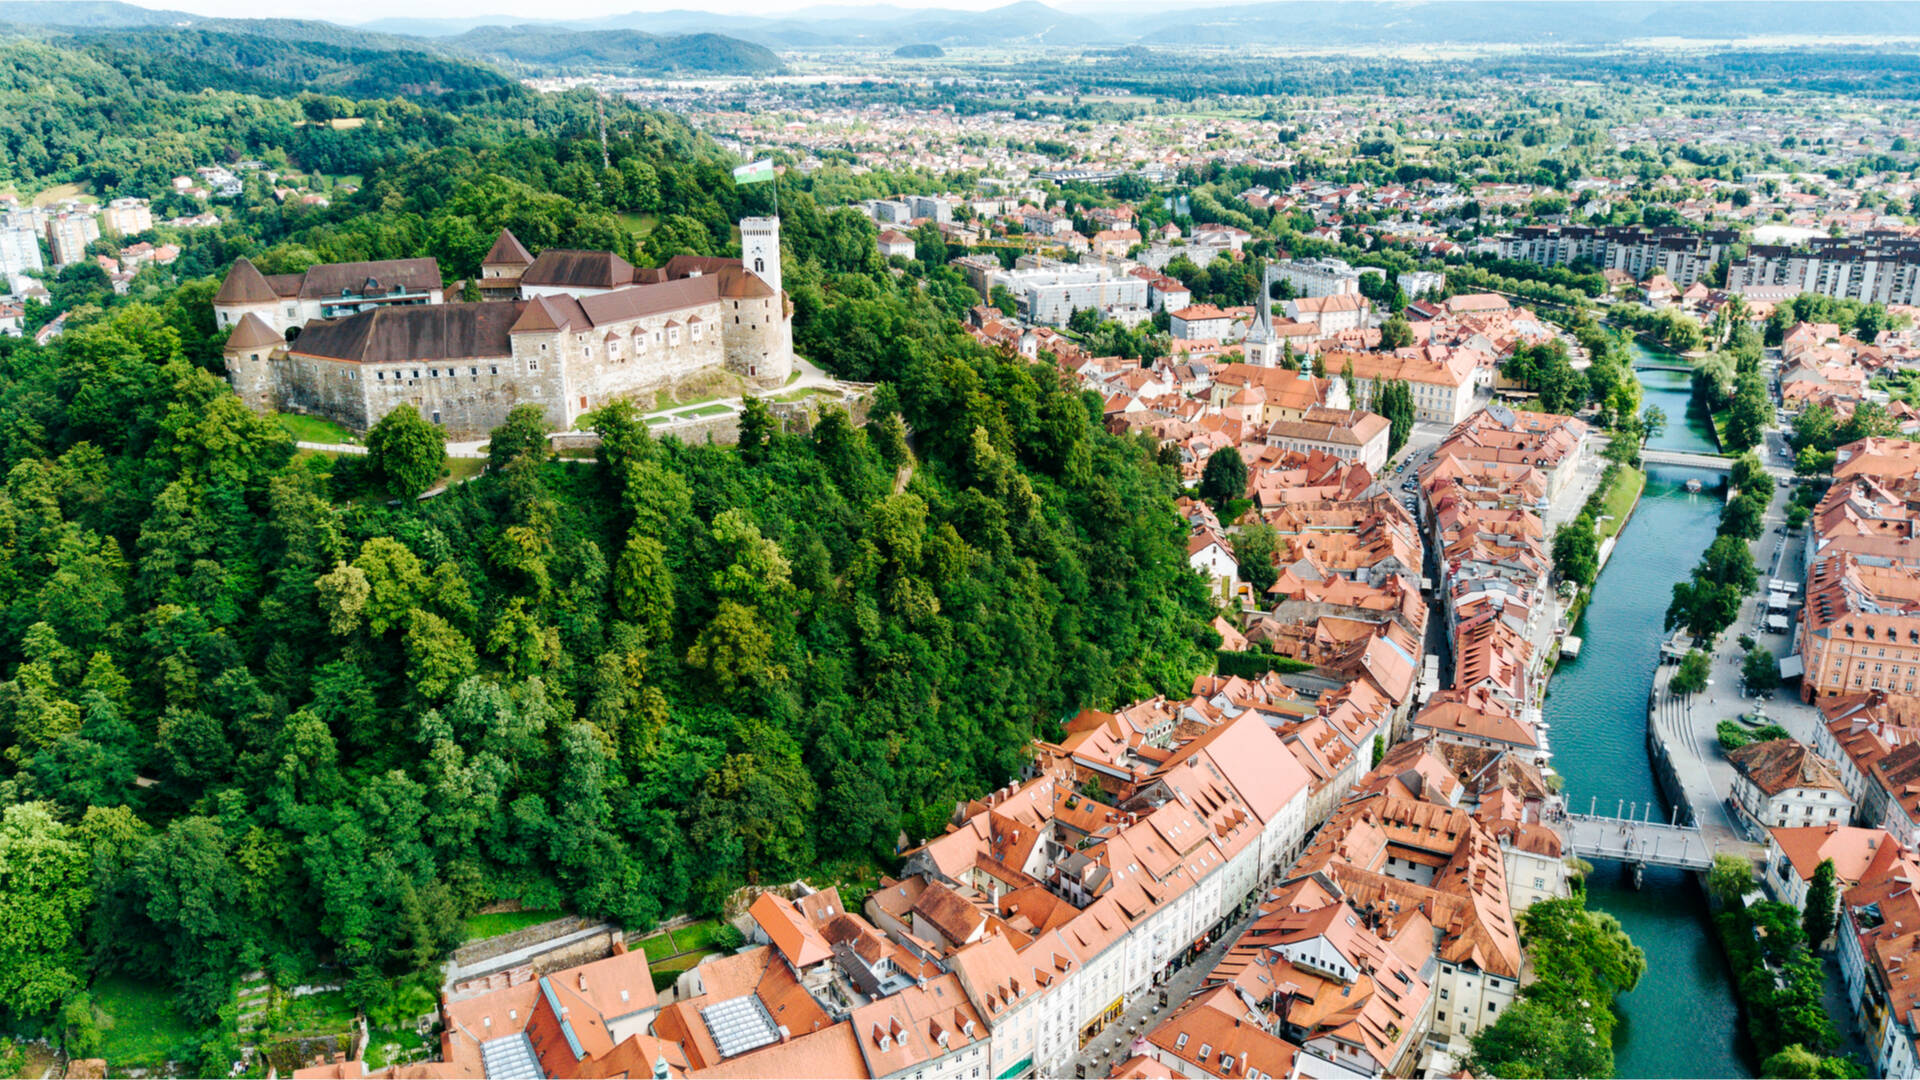 Ljubljana Reisen und Billigflug - Slowenien - Hotels und Flug nach Ljubljana